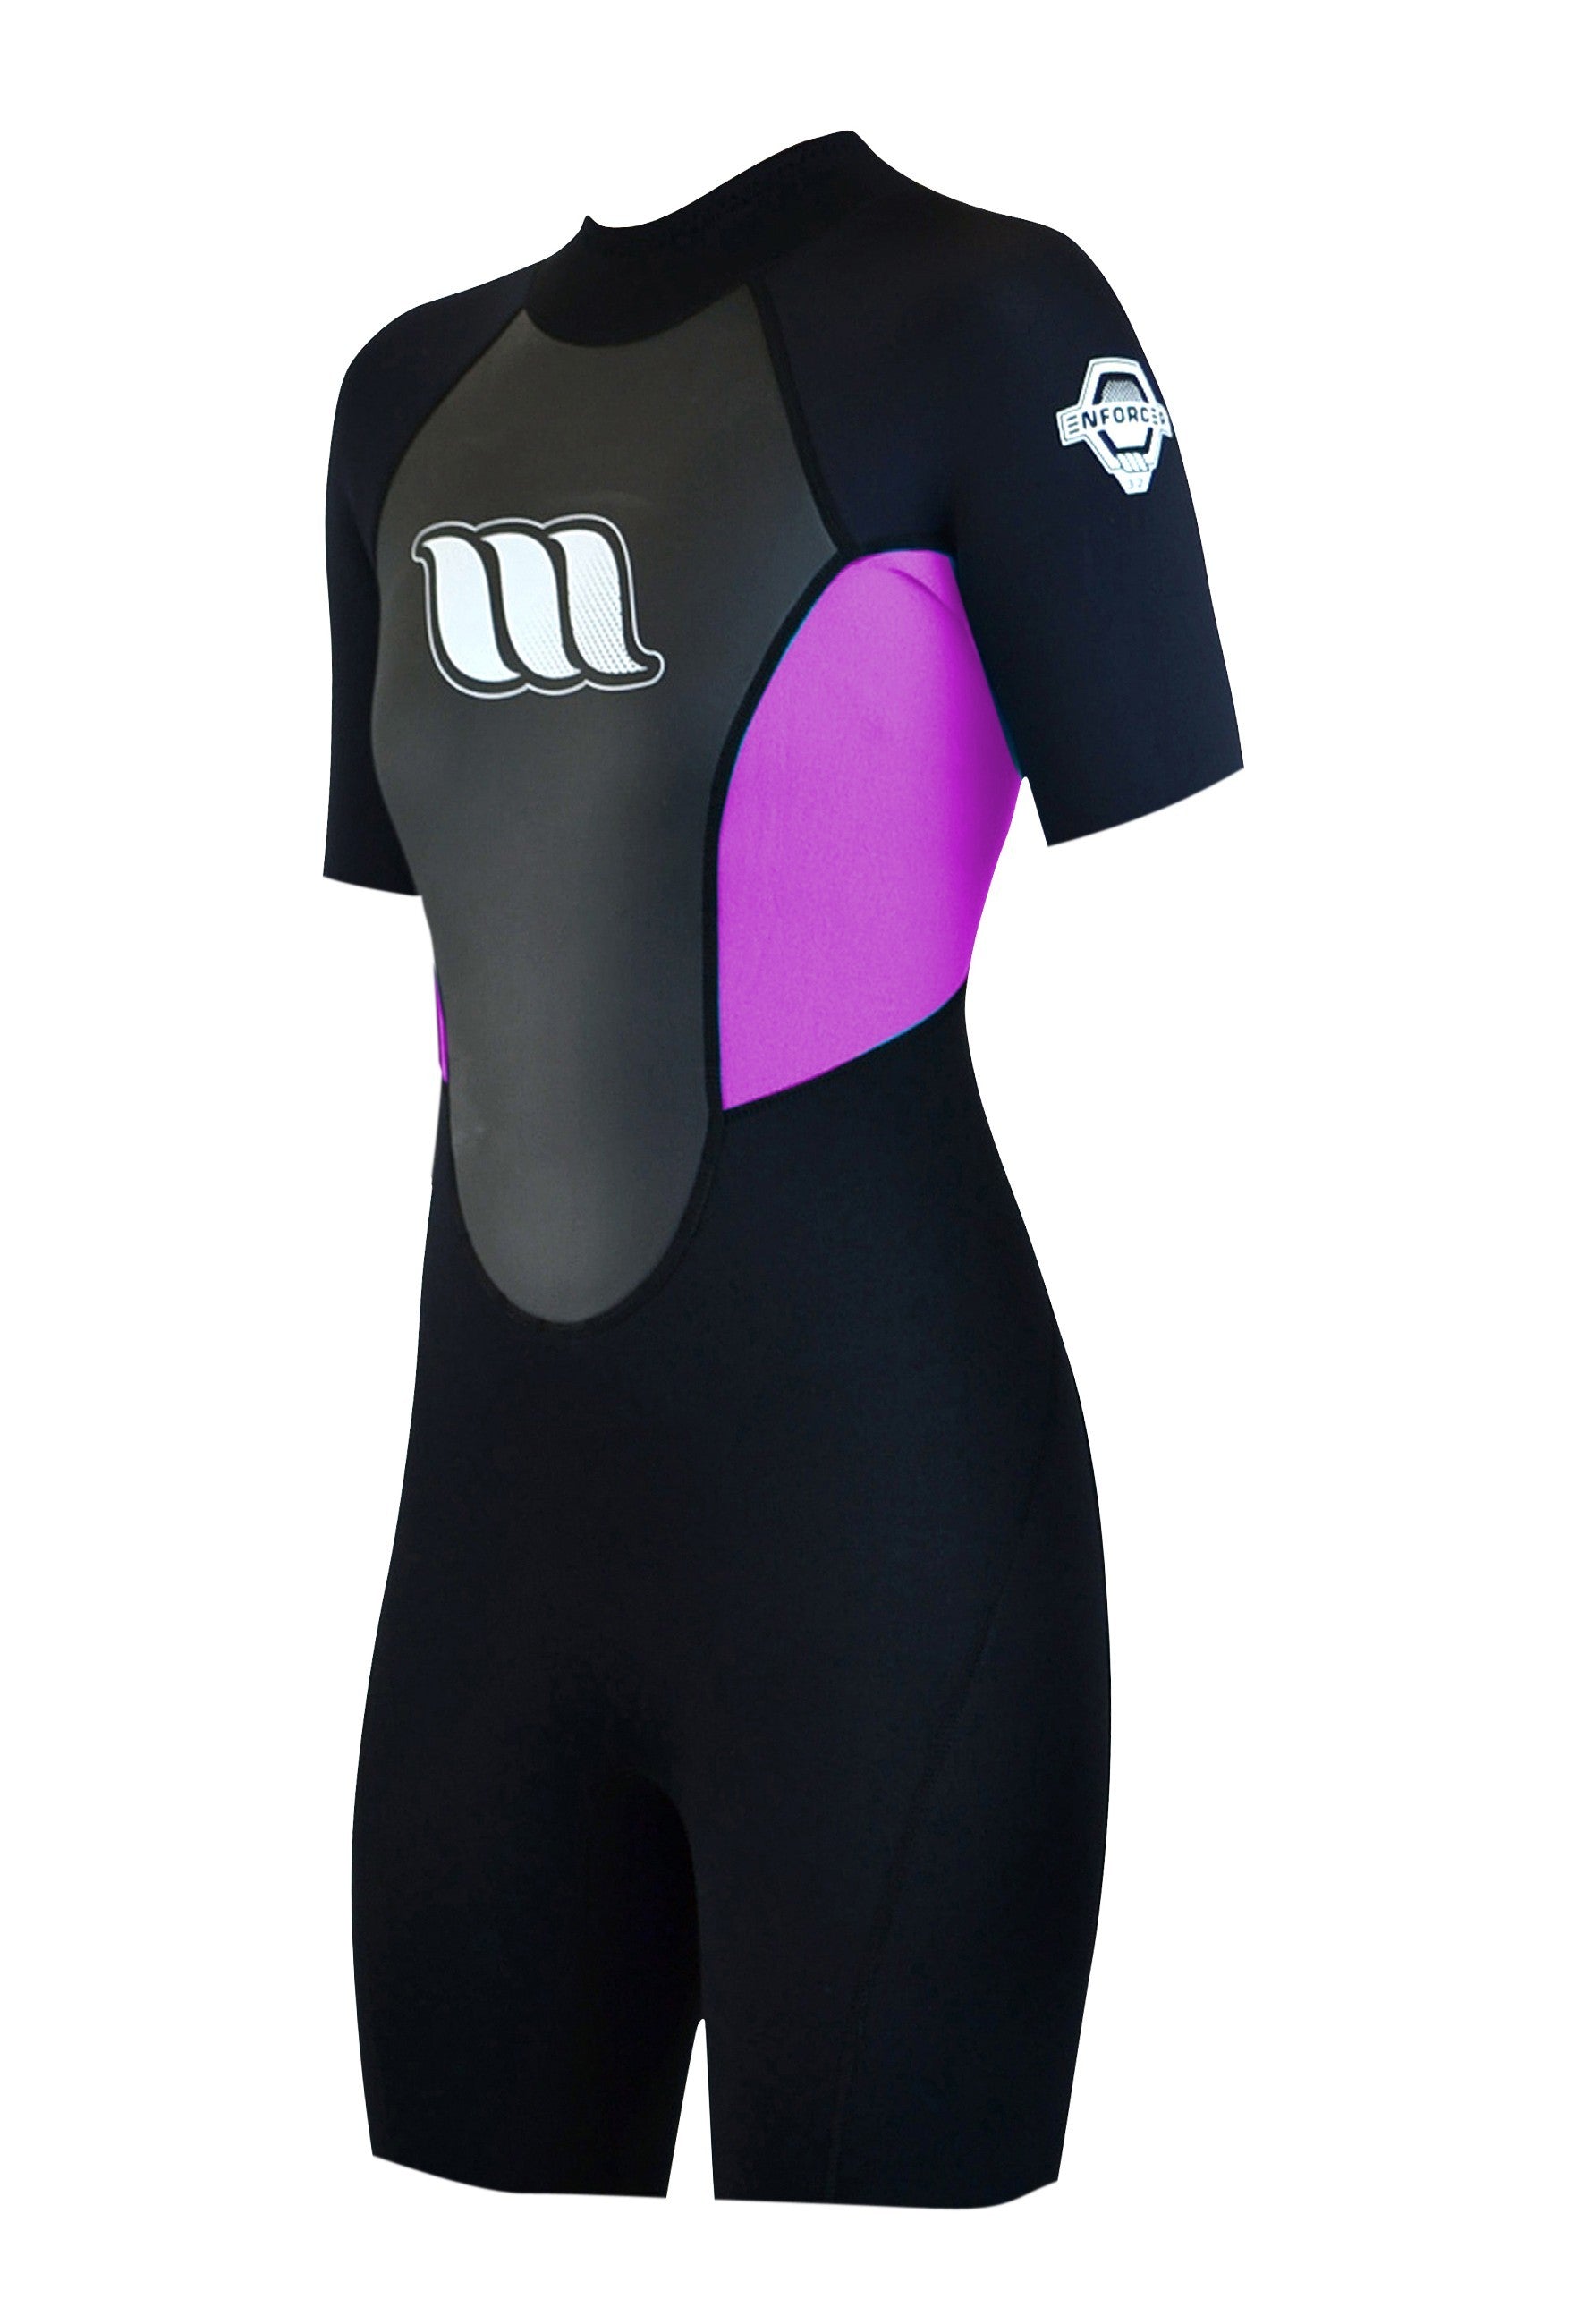 WEST - Women's surf wetsuit - Enforcer Lady Shorty 2/2mm back zip - Pink